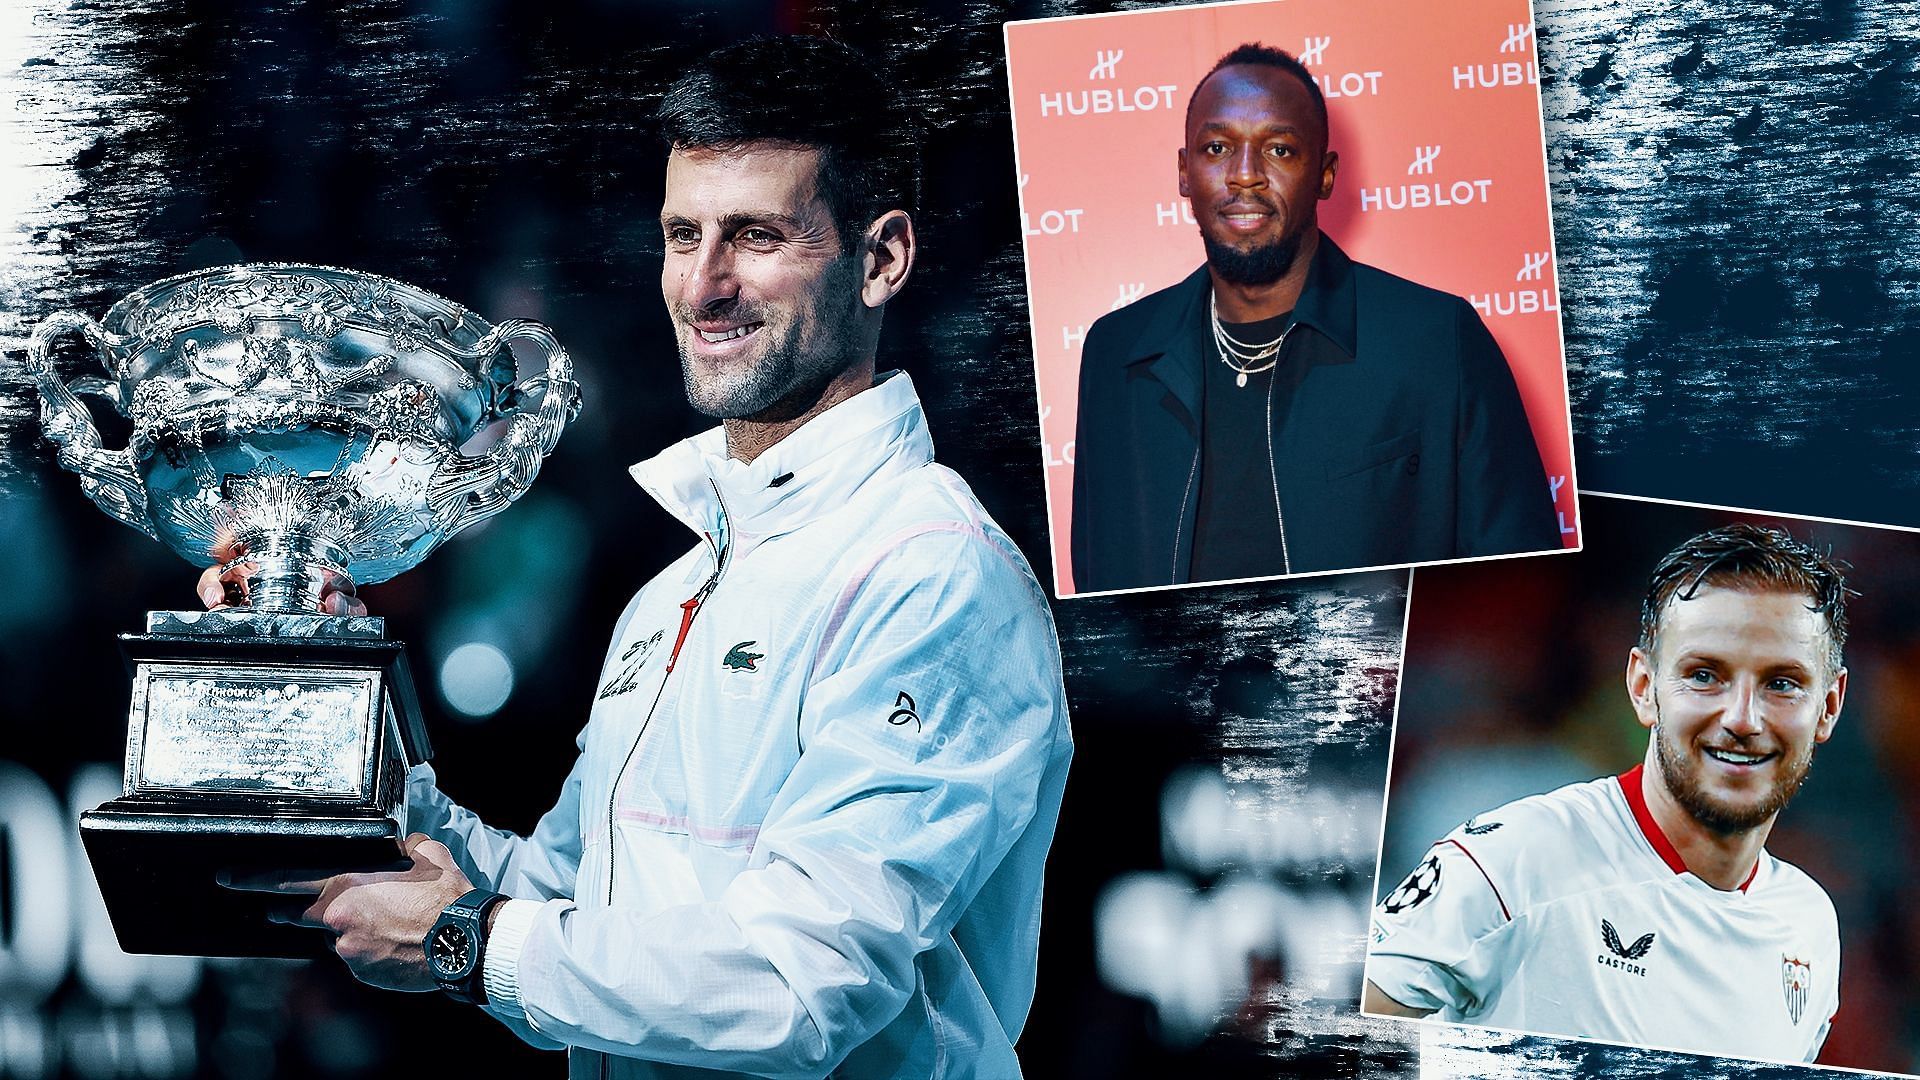 Bolt, Rakitic and other celebrities congratulate Novak Djokovic for Australian Open triumph.